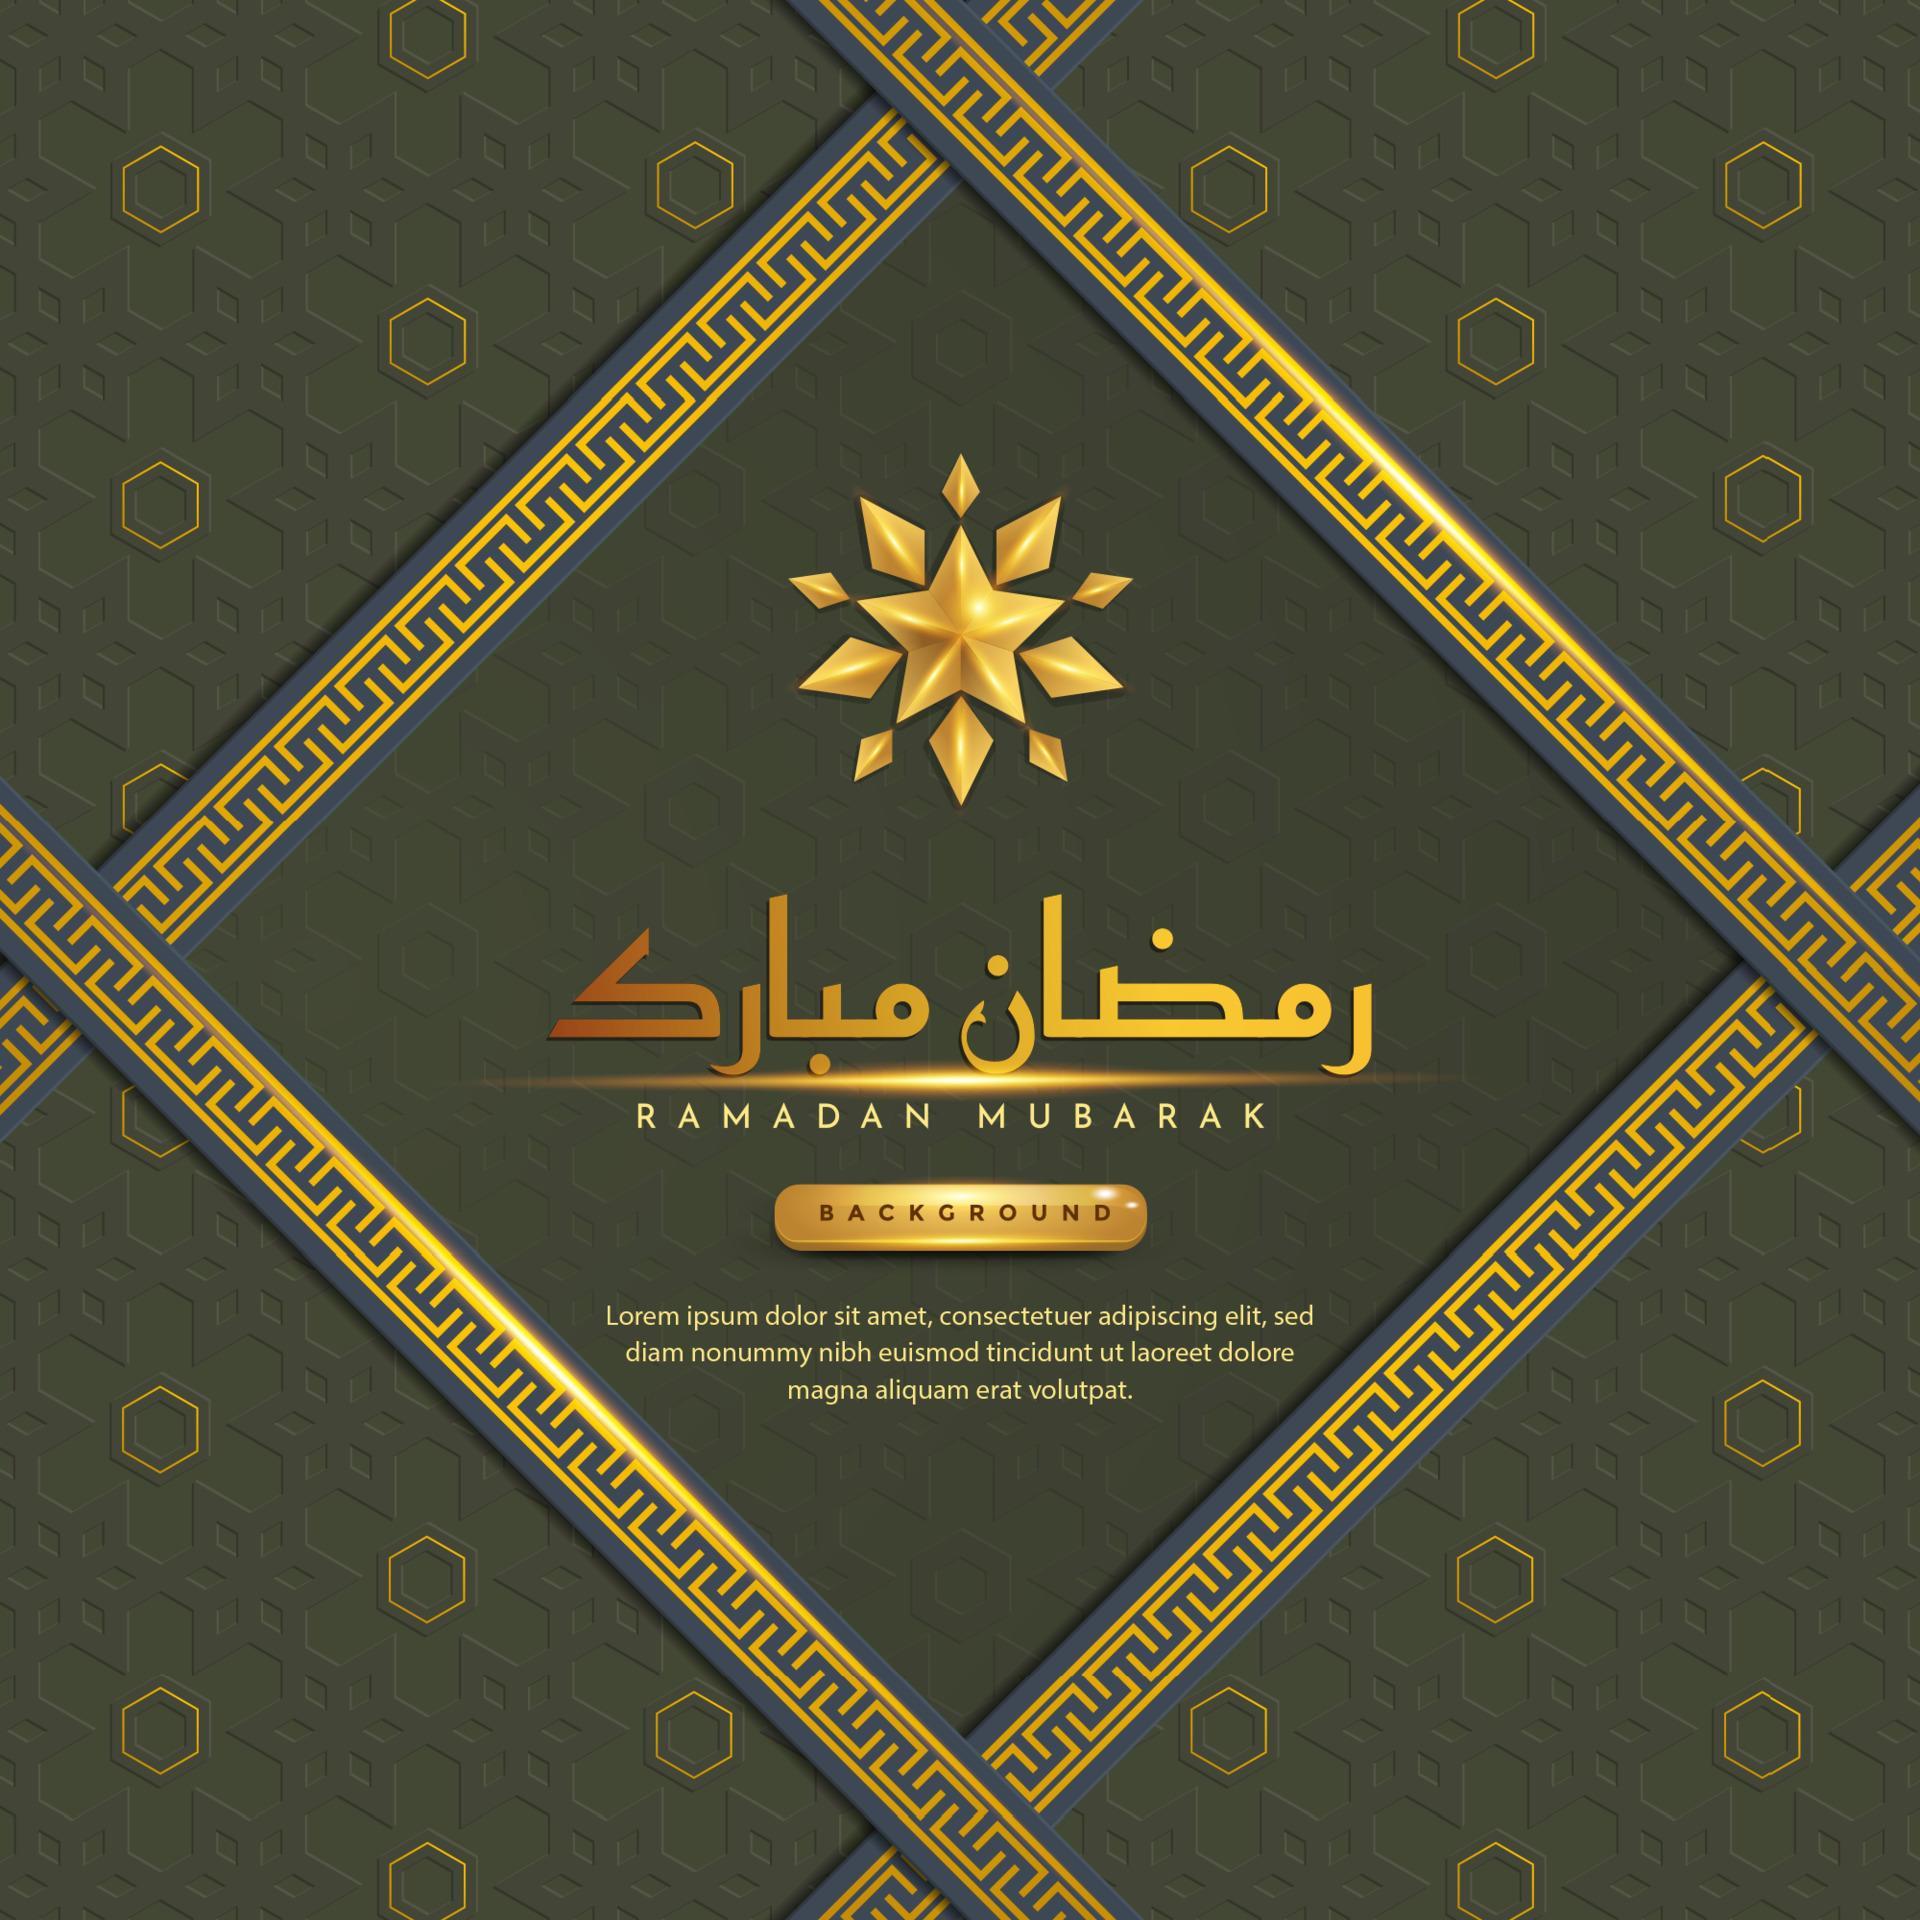 Ramadan kareem islamic greeting background with arabic pattern 5731448 ...